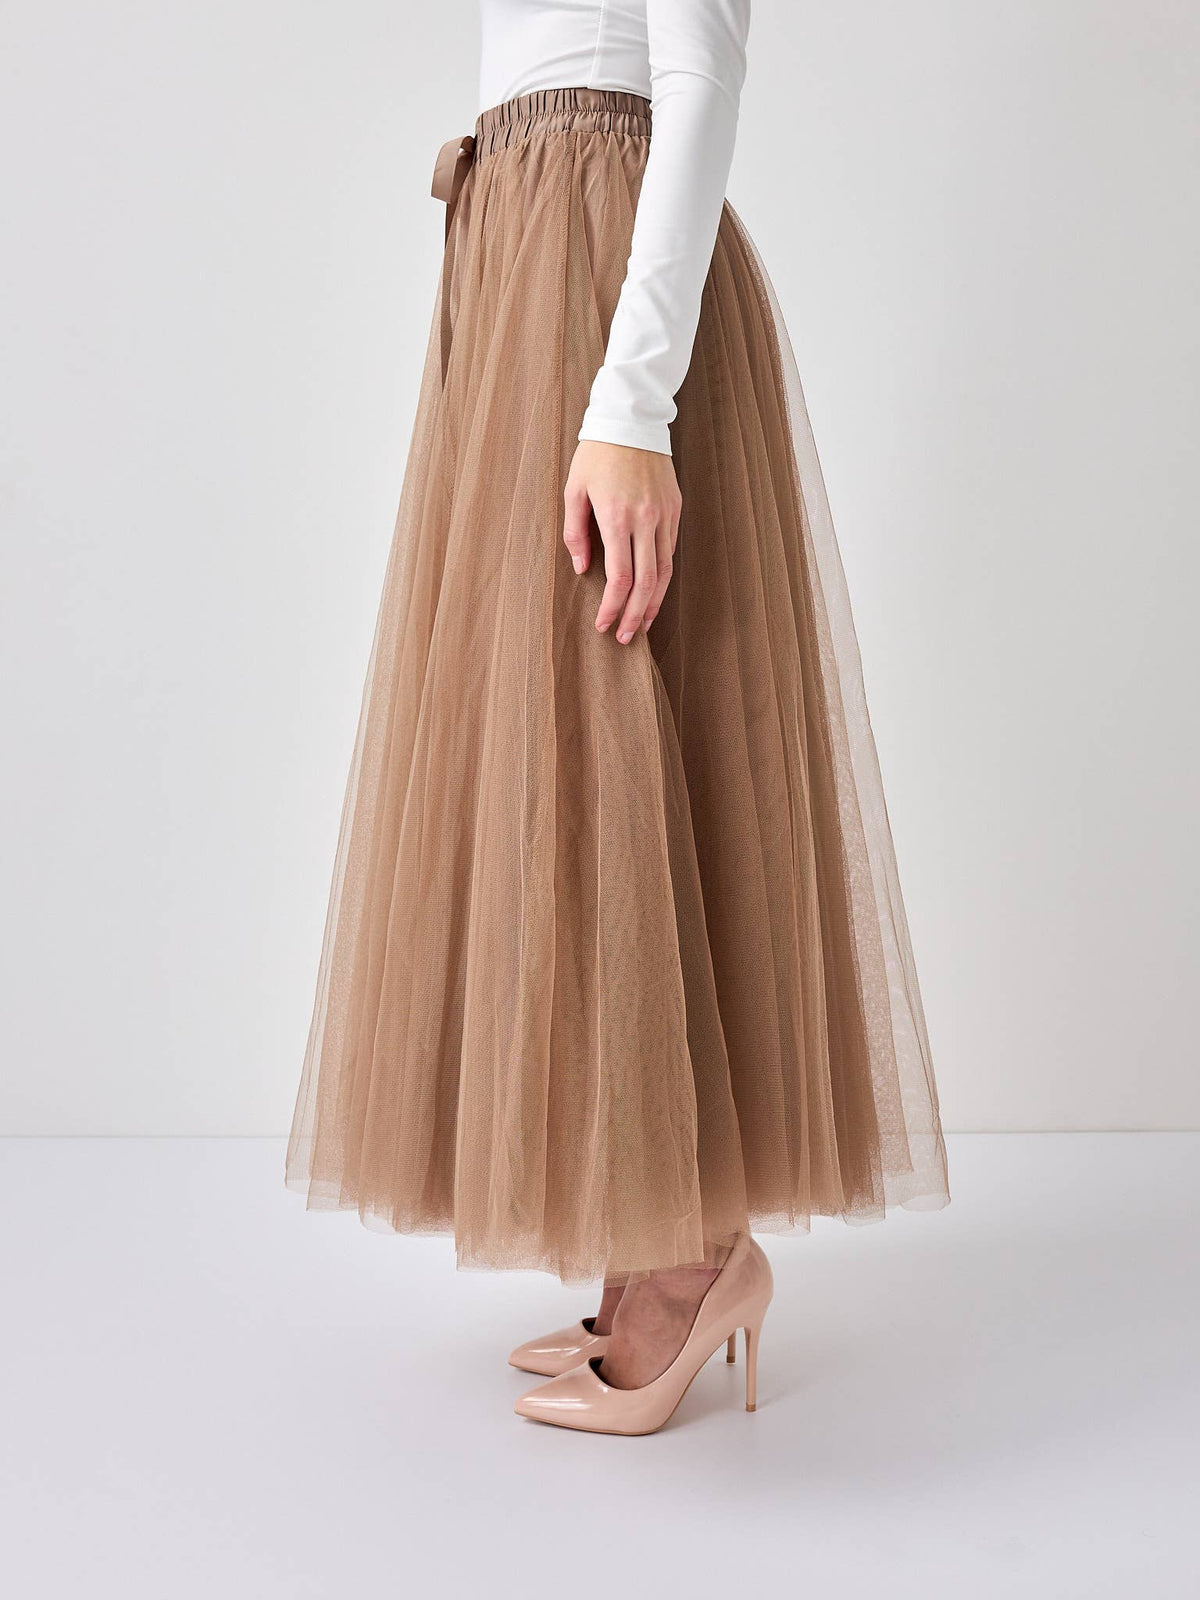 Aria Tulle Skirt